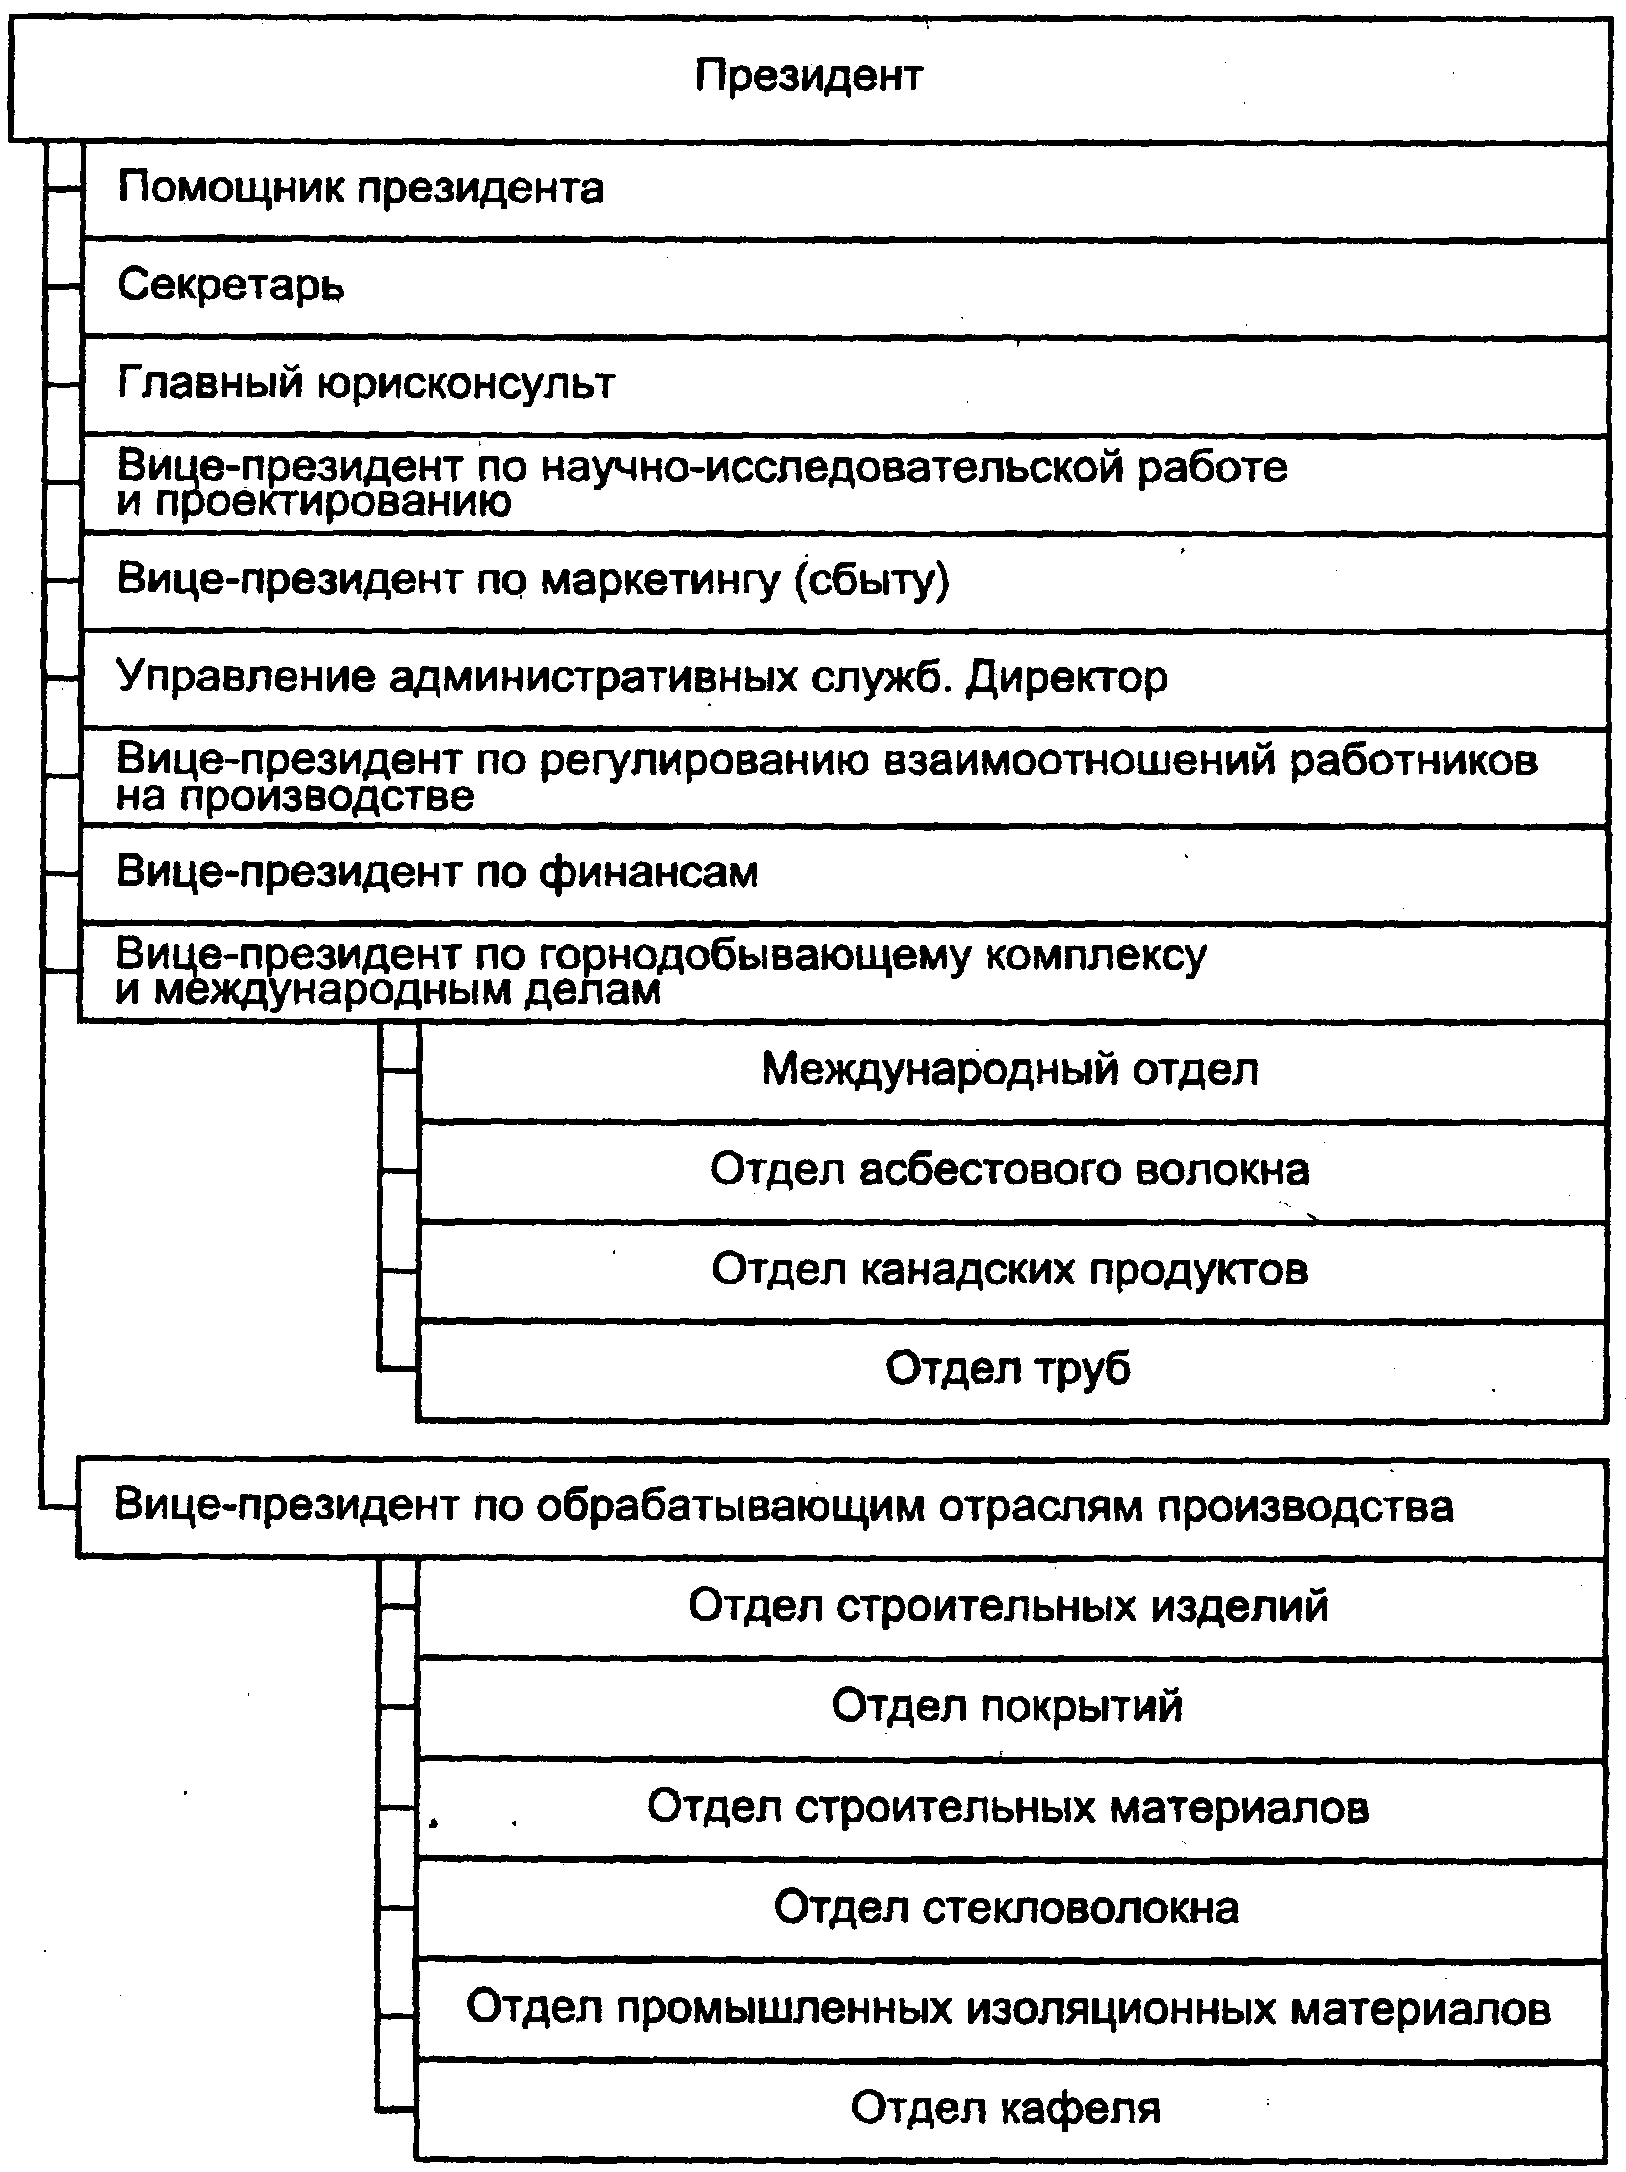 типы организационных структур корпораций - student2.ru